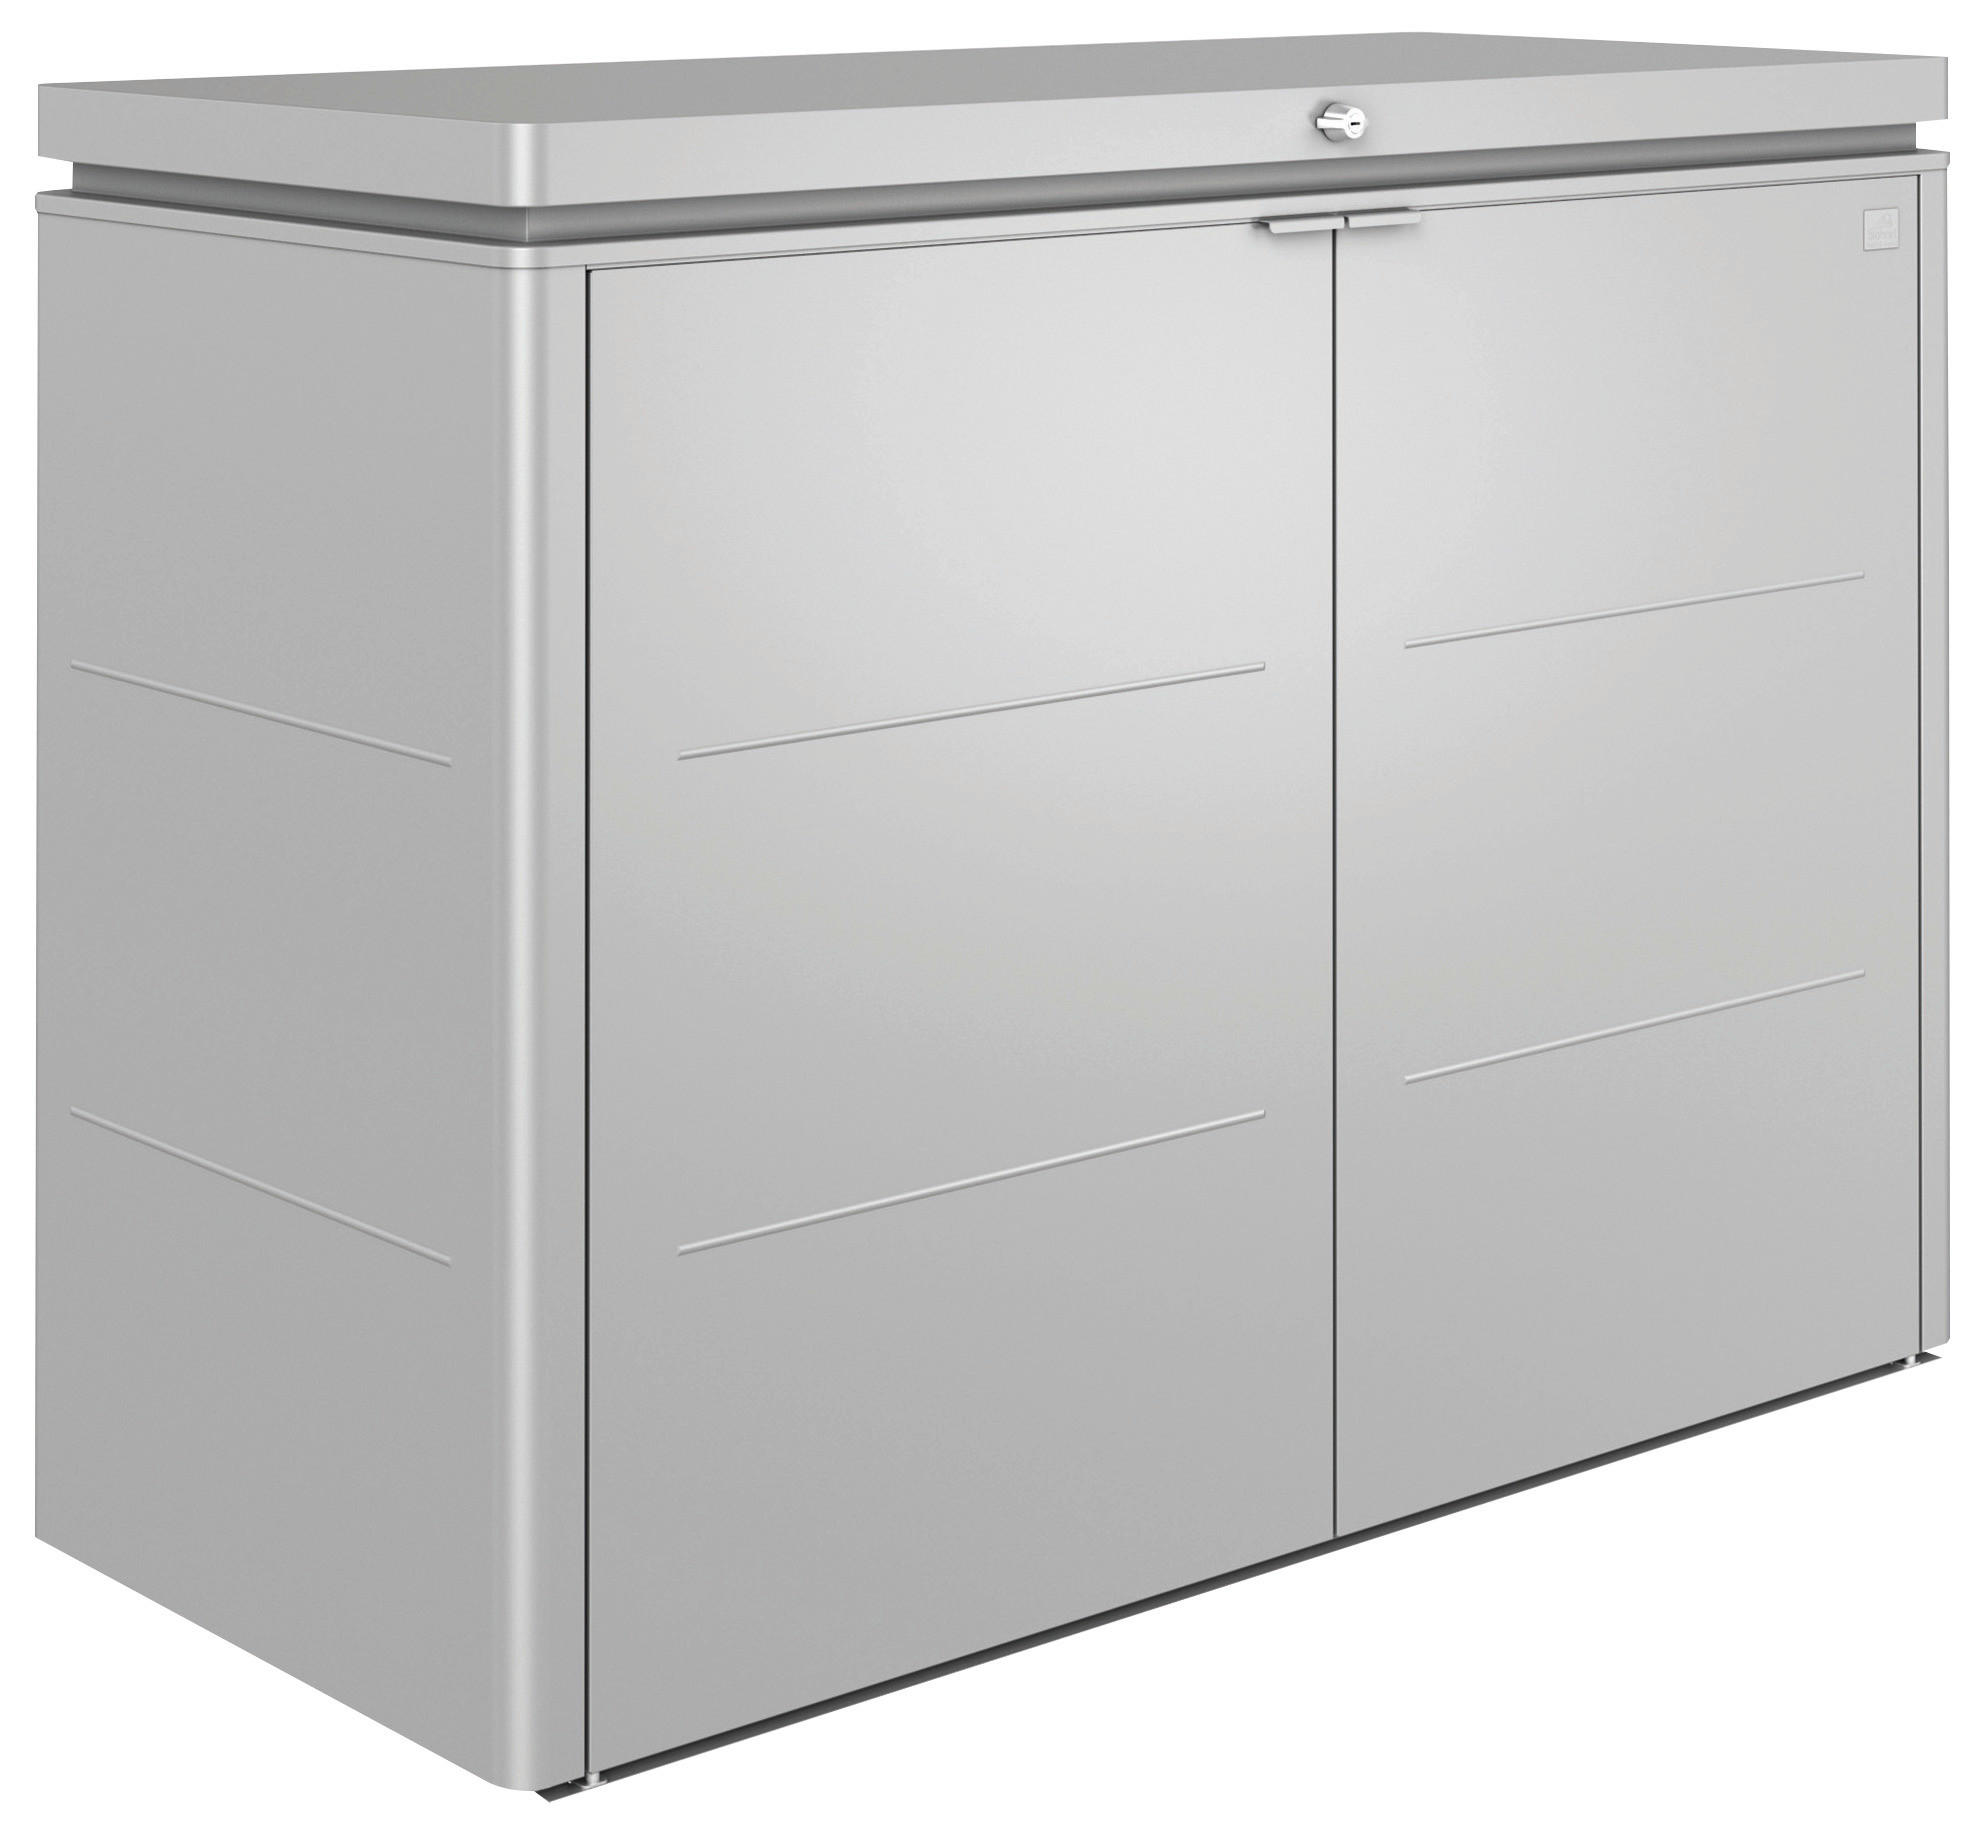 GARTENBOX 160/118/70 cm  - Silberfarben, Design, Metall (160/118/70cm) - Biohort